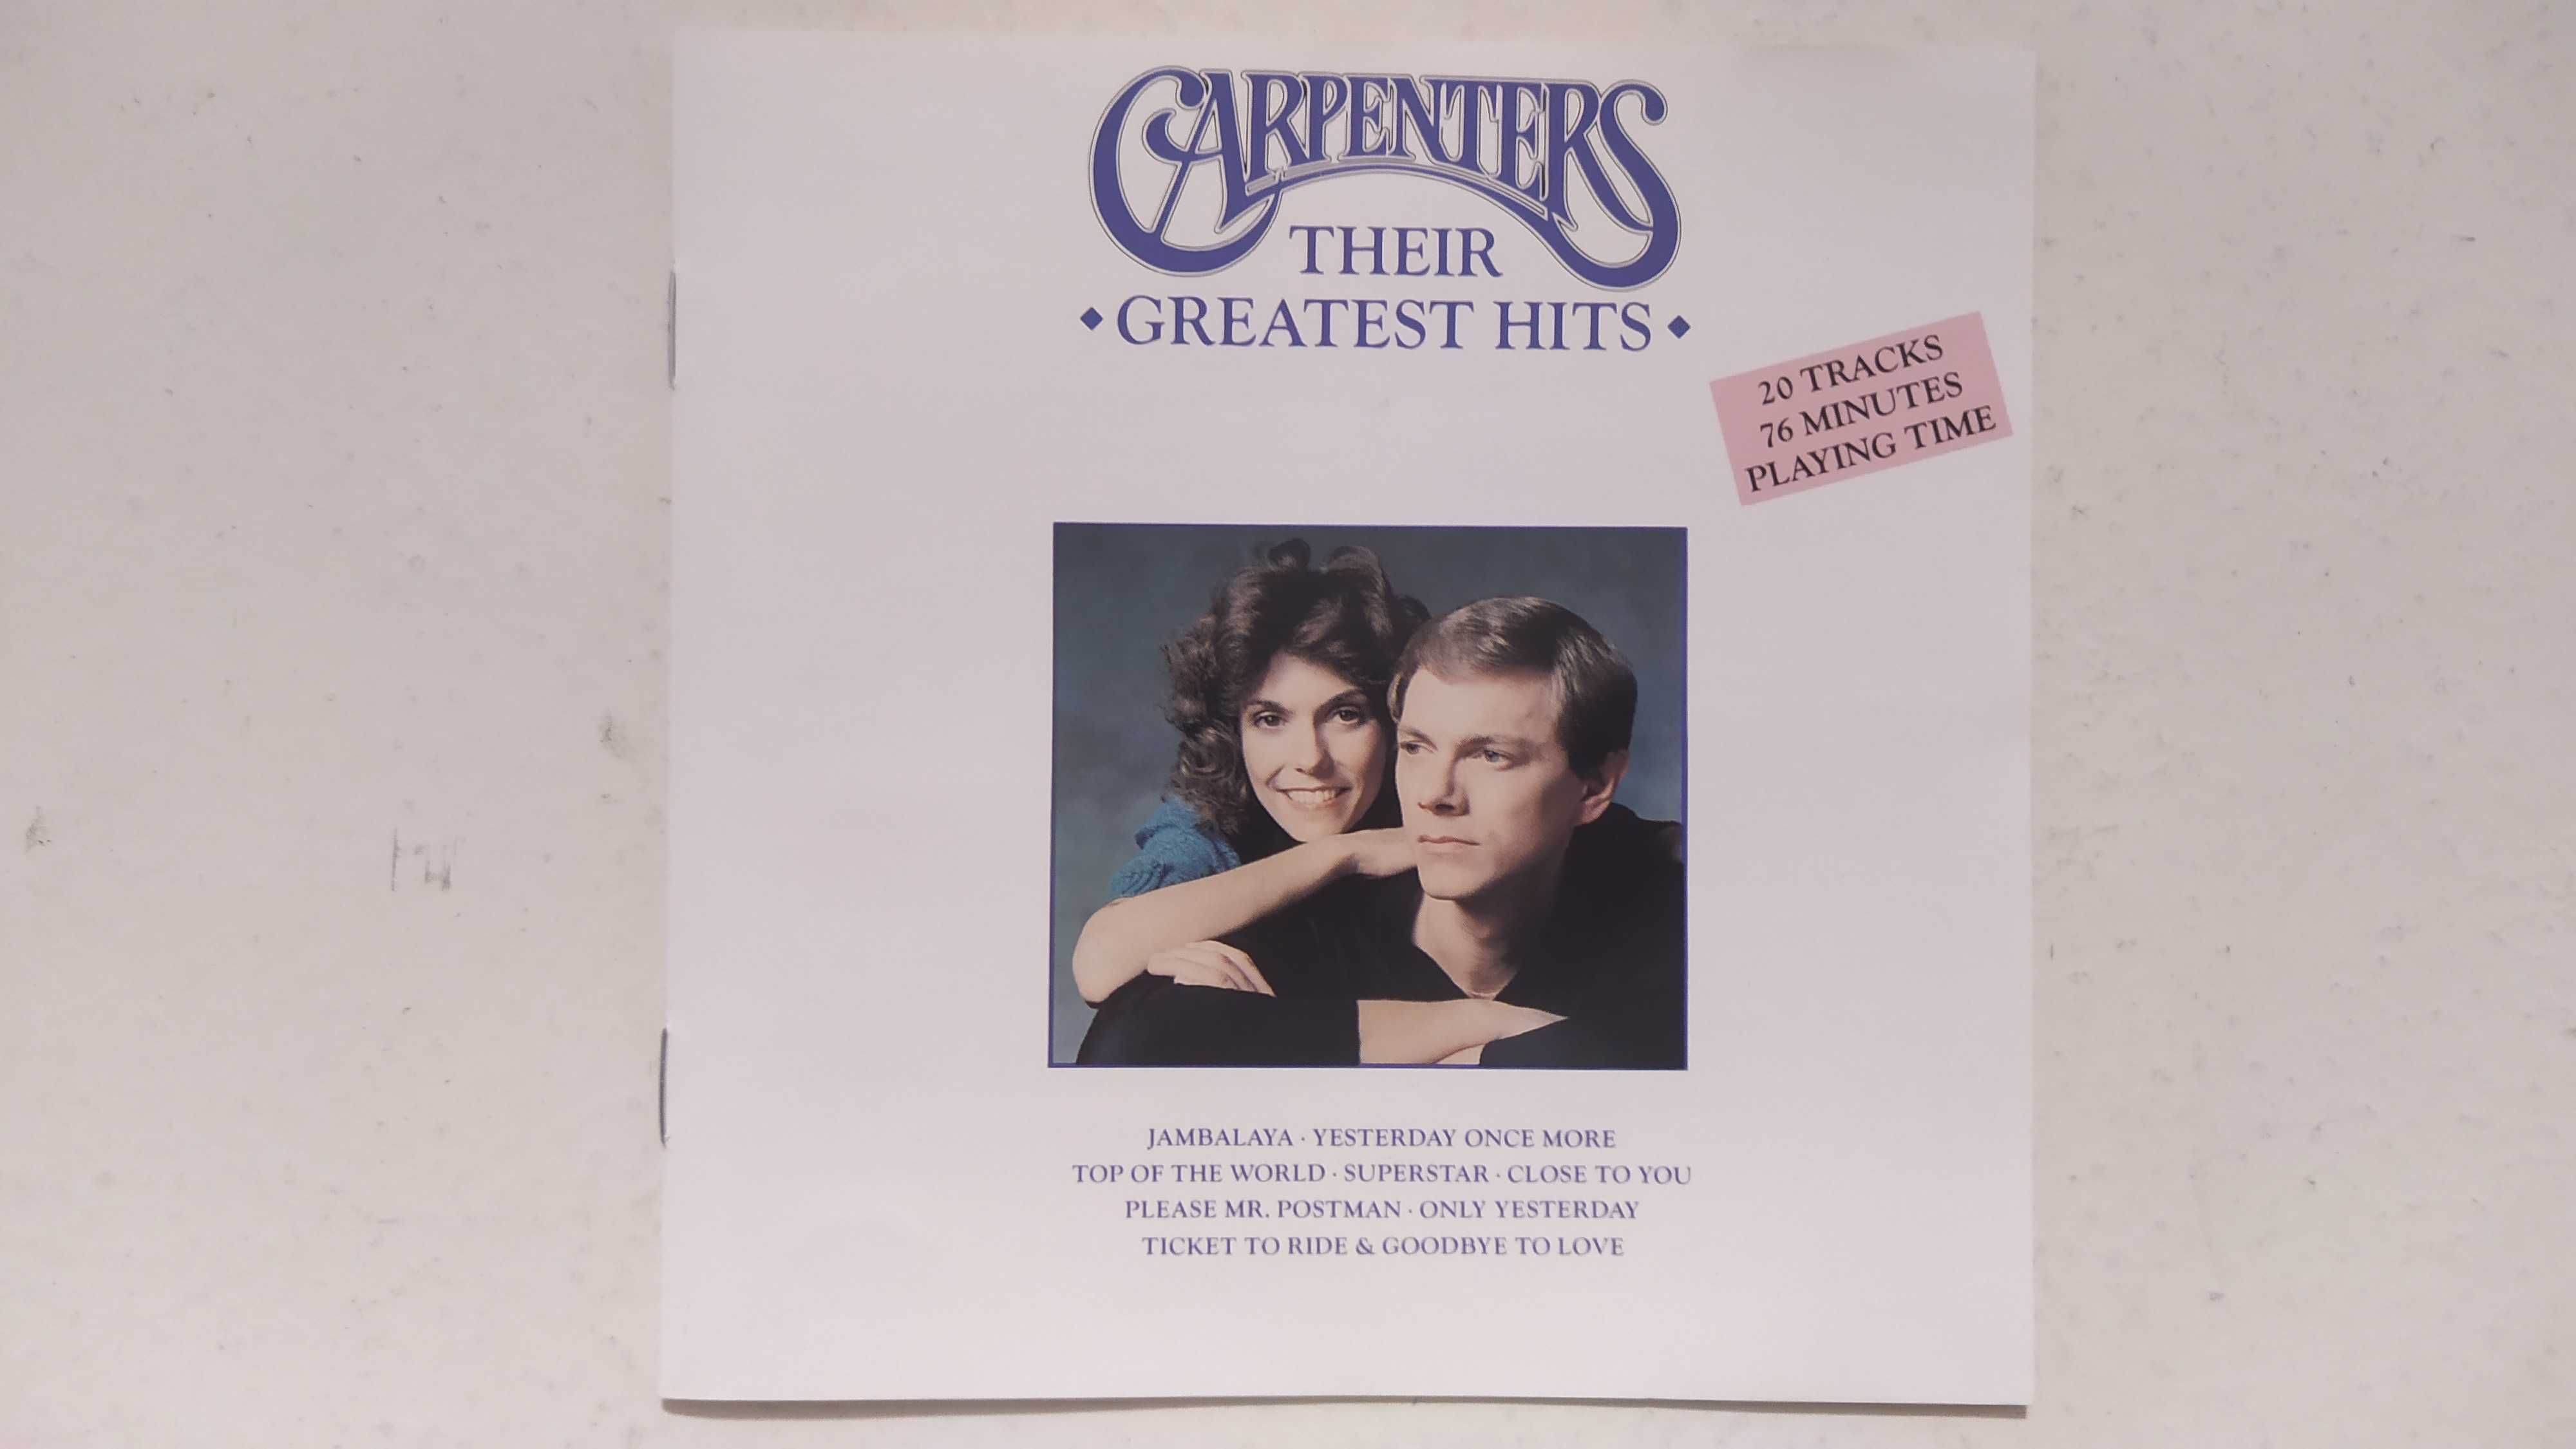 Carpenters Their Greatest Hits Jambalaya Please Mr Postman CD